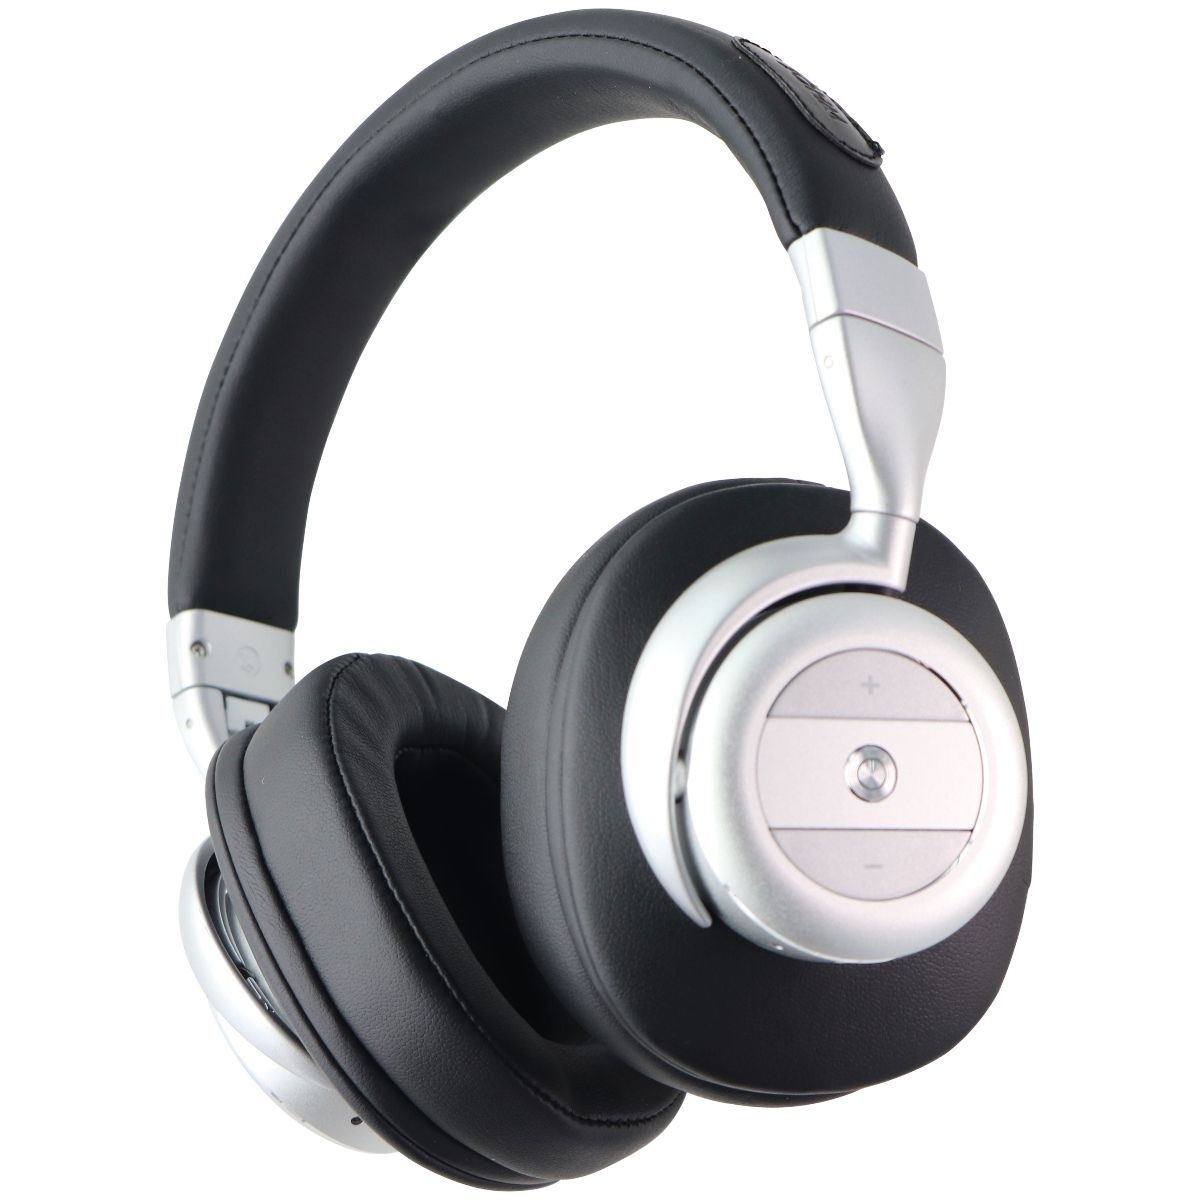 BOHM B76 Wireless Bluetooth Over-Ear Noise Canceling Headphones - Black / Silver